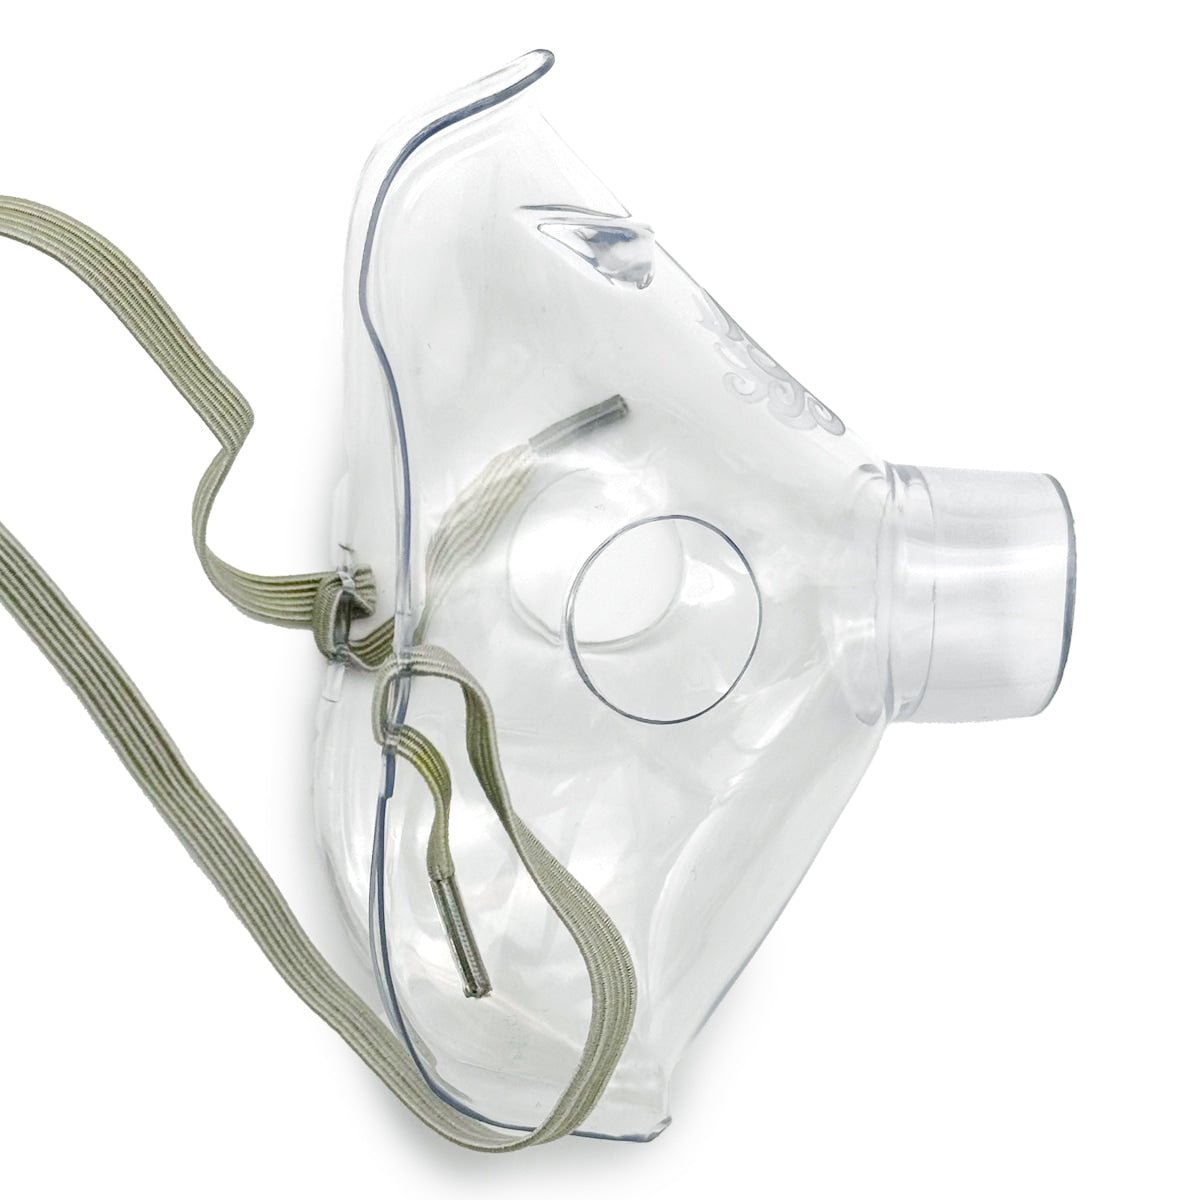 Adult Mask for Sunset NEB402 Handheld Mesh Nebulizers